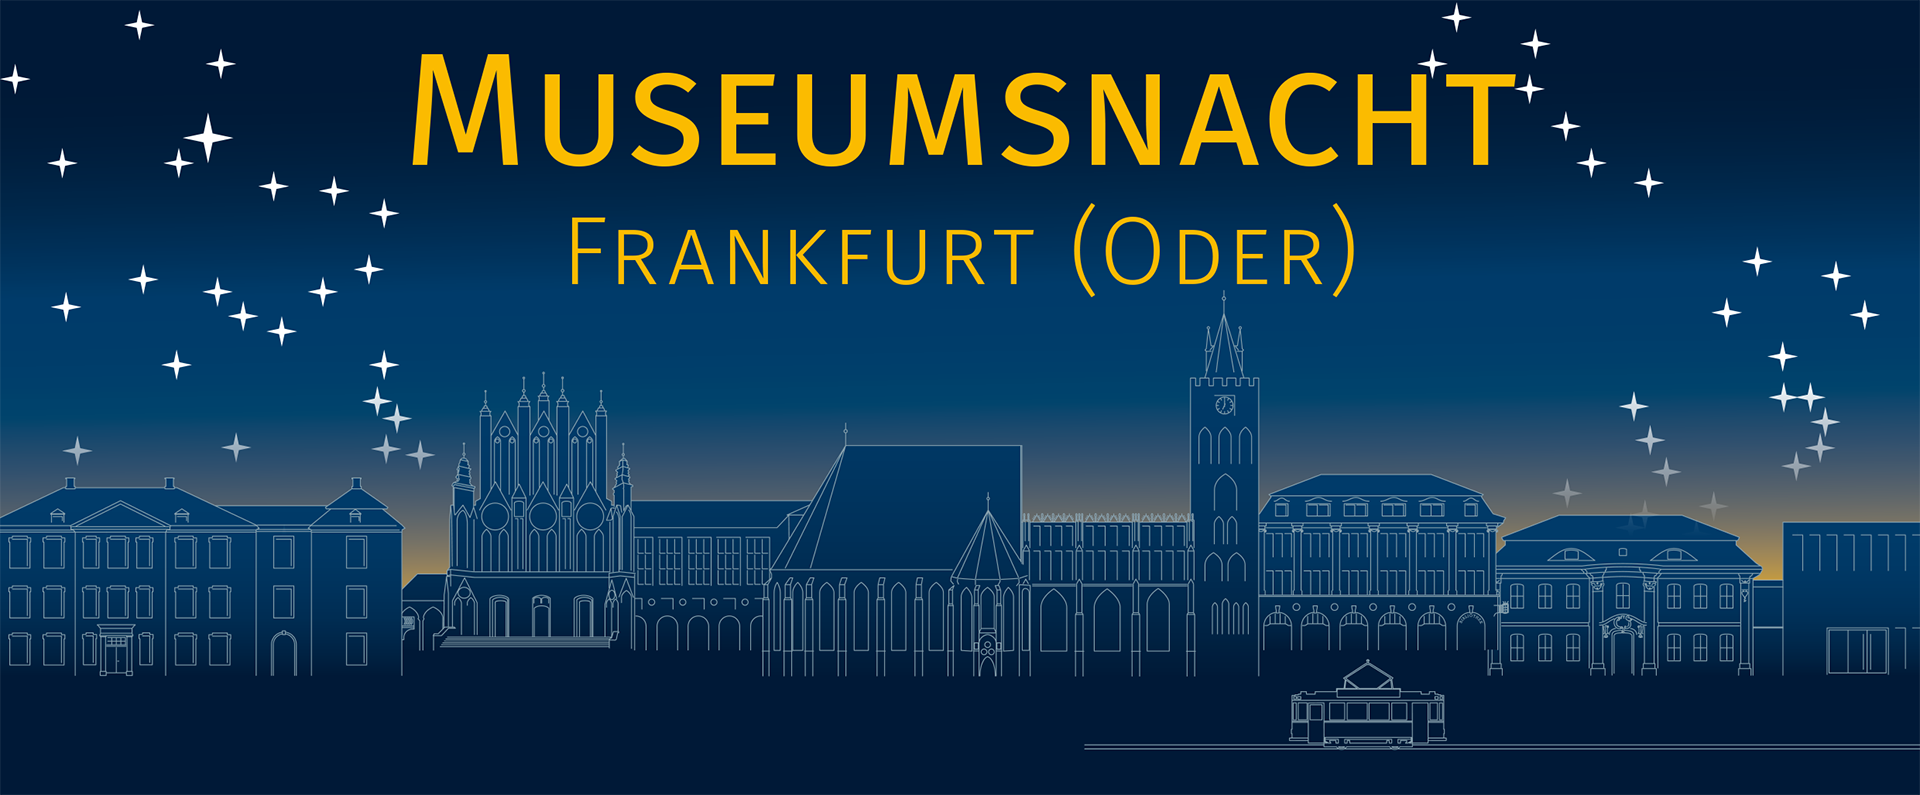 Museumsnacht Frankfurt (Oder)